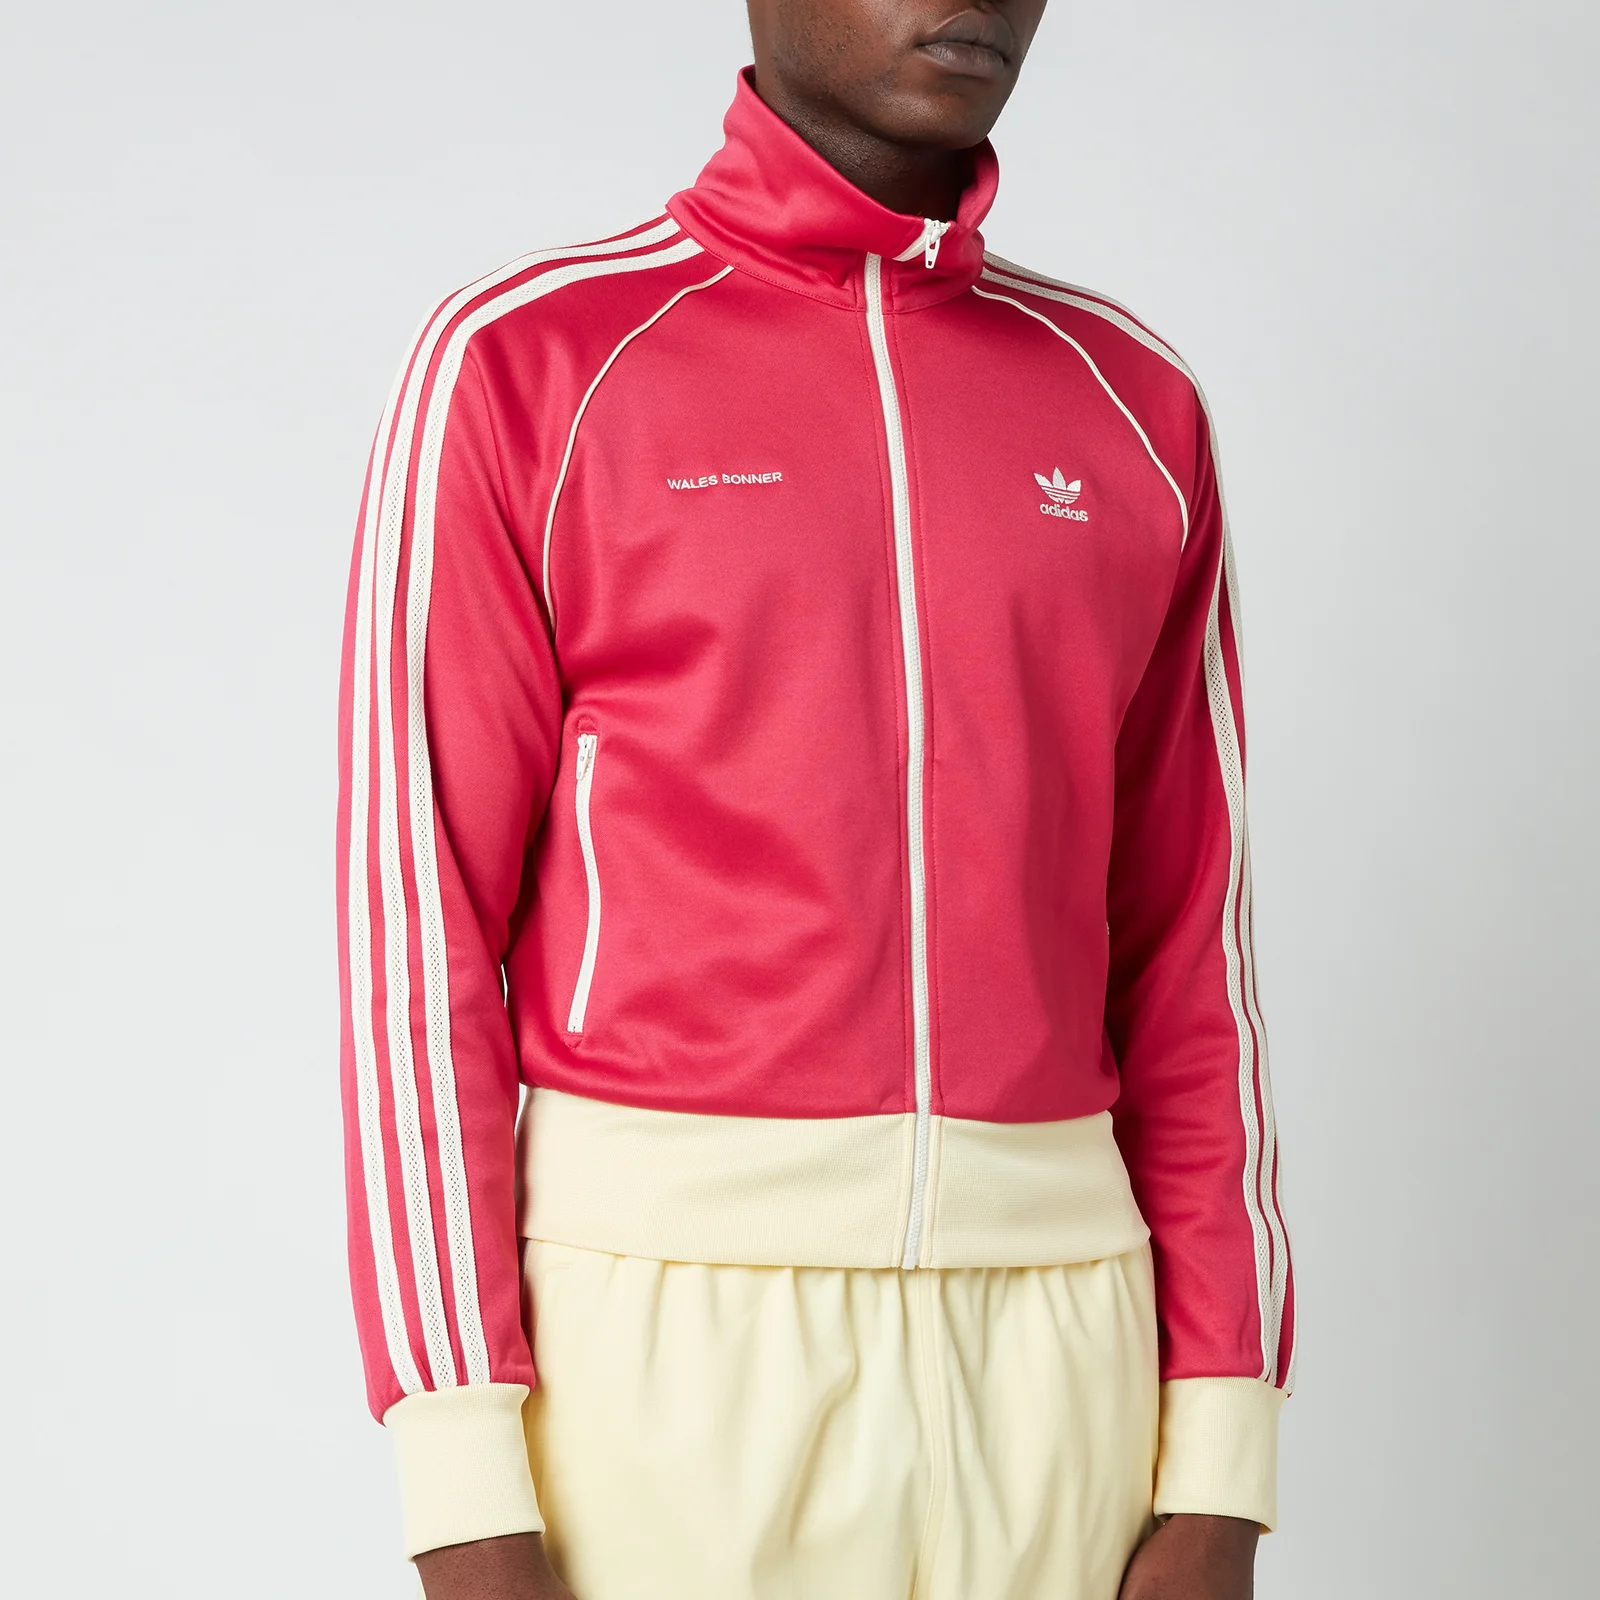 adidas X Wales Bonner Men's 70S TT Jacket - Rave Pink Image 1